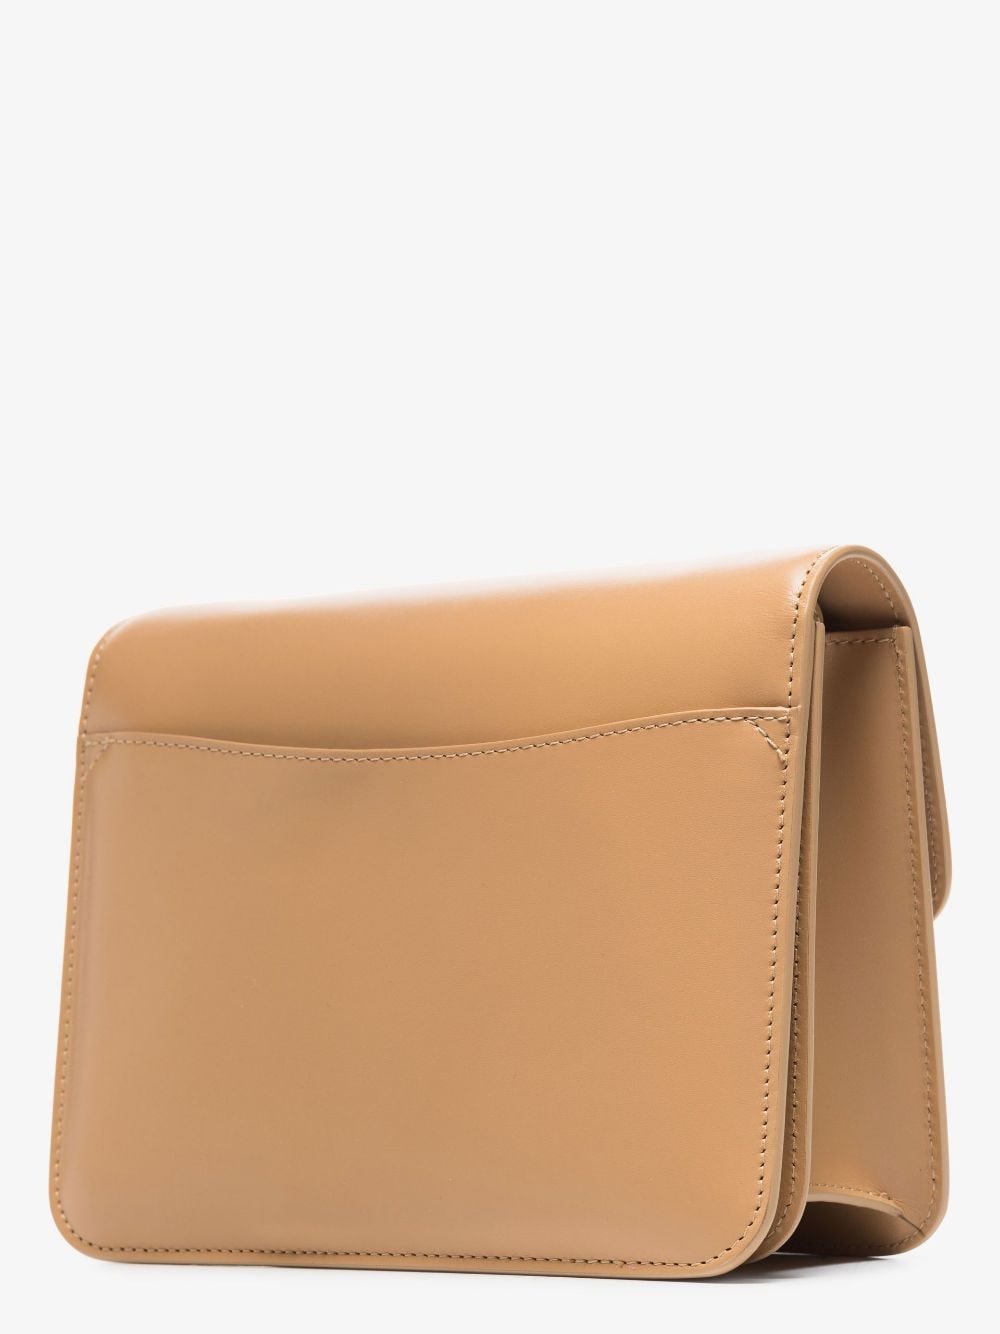 Soft tan calf leather Kattie leather crossbody bag